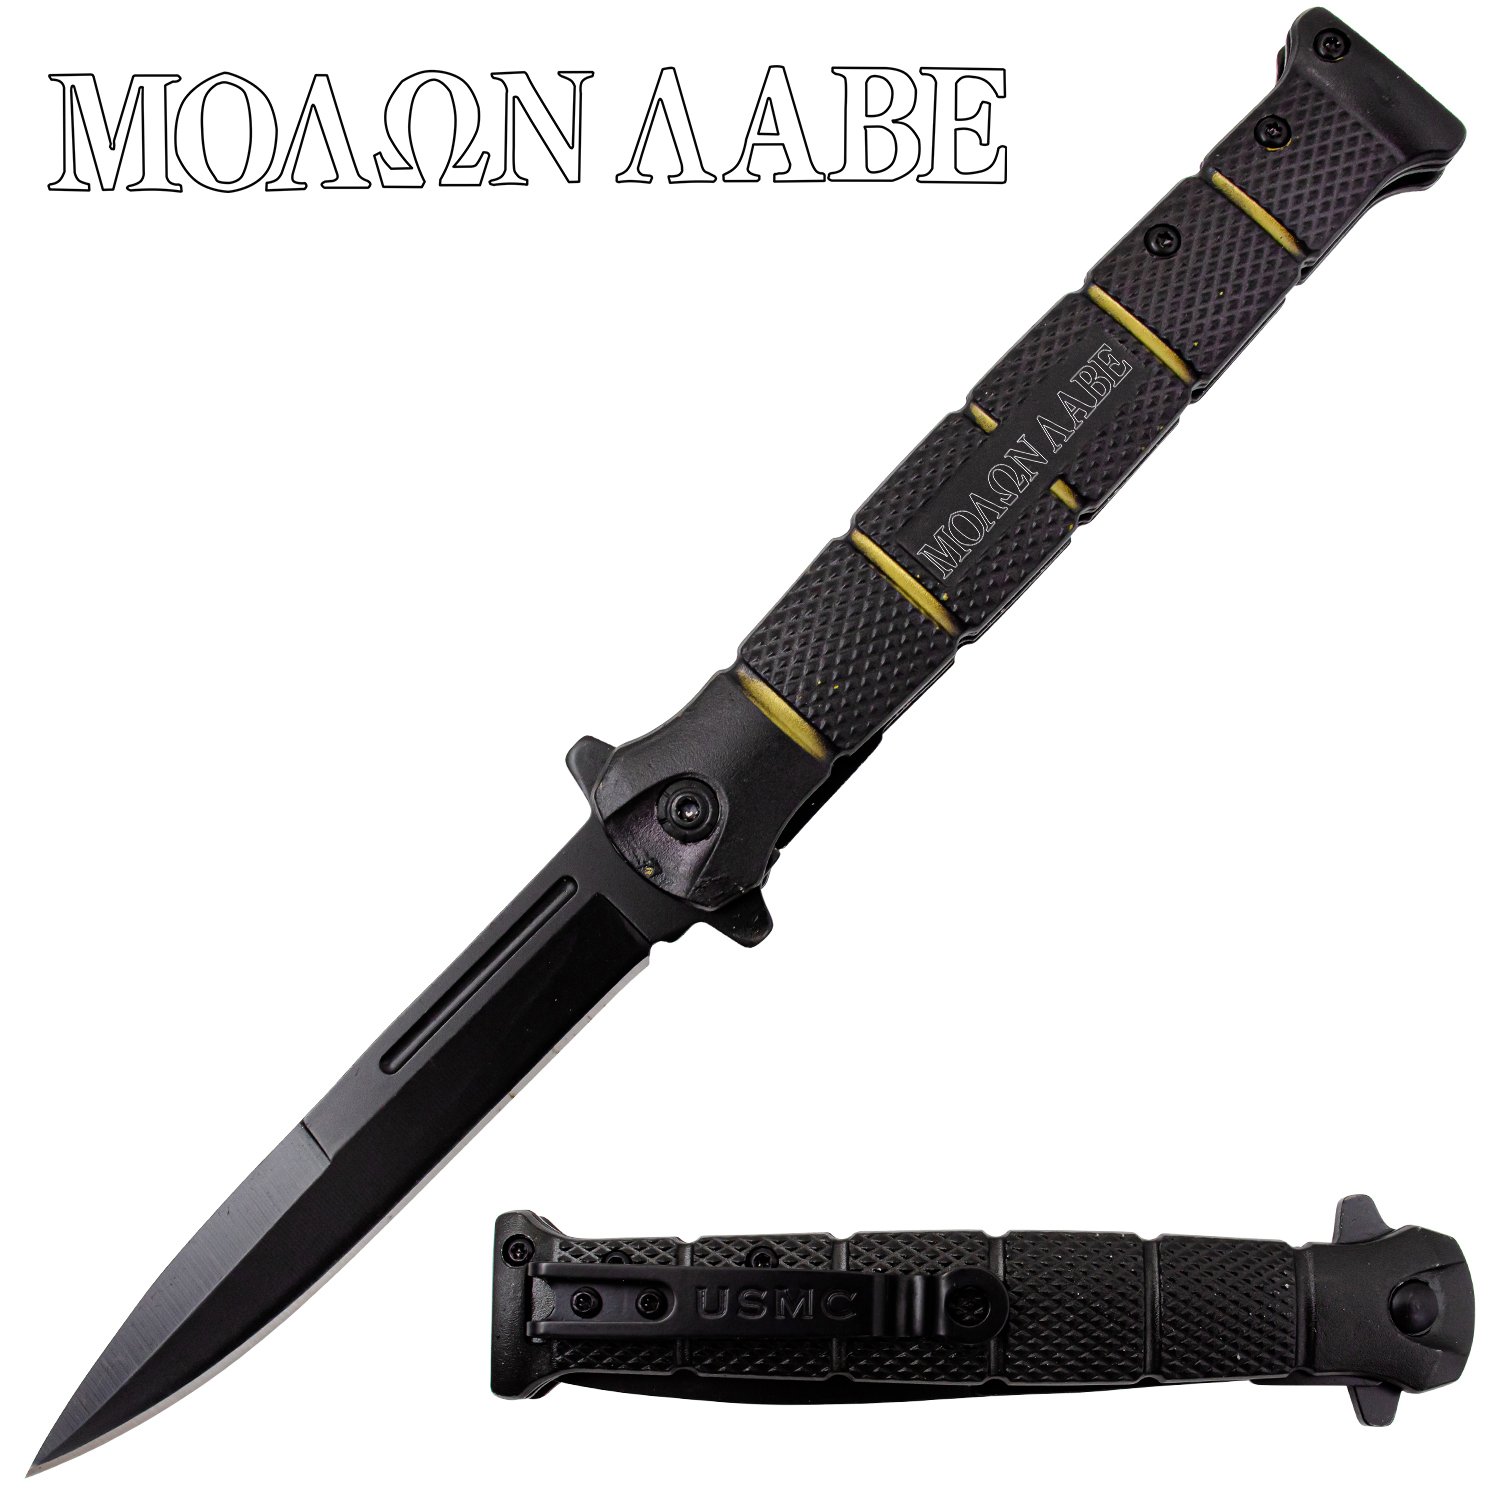 MOVQNVABLE Black 9.25 Inch Large Military Spring Assisted Folding Pocket Knife